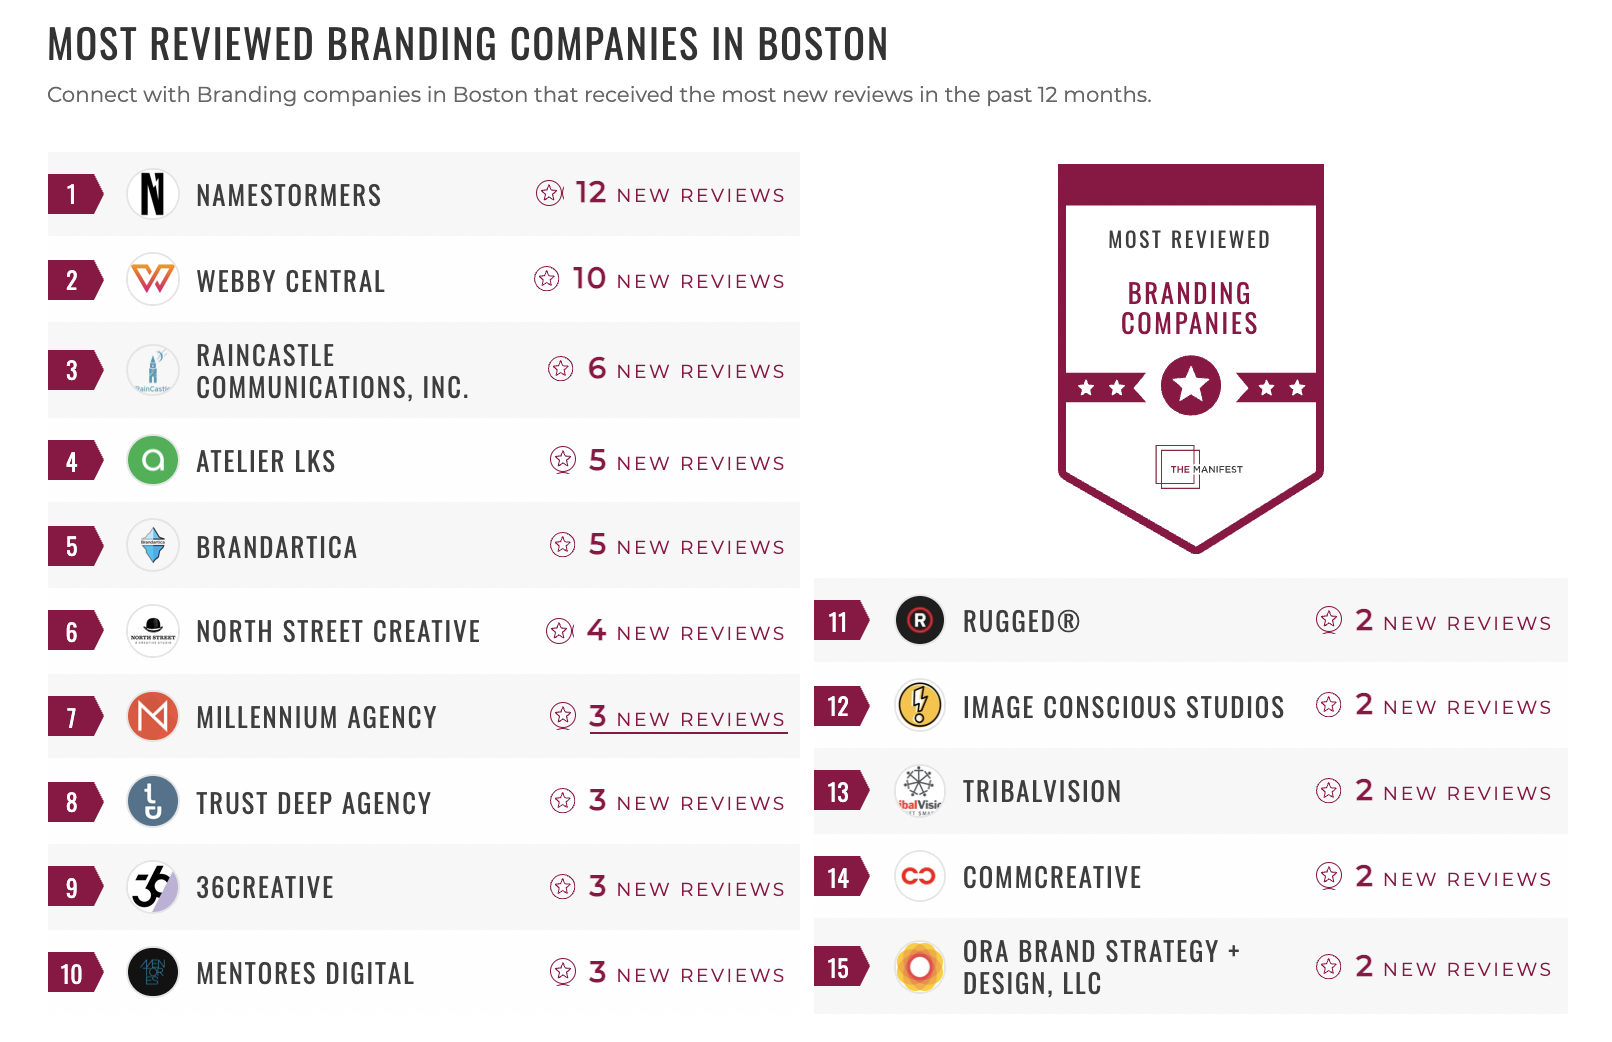 Most Reviewed Branding Companies in Boston